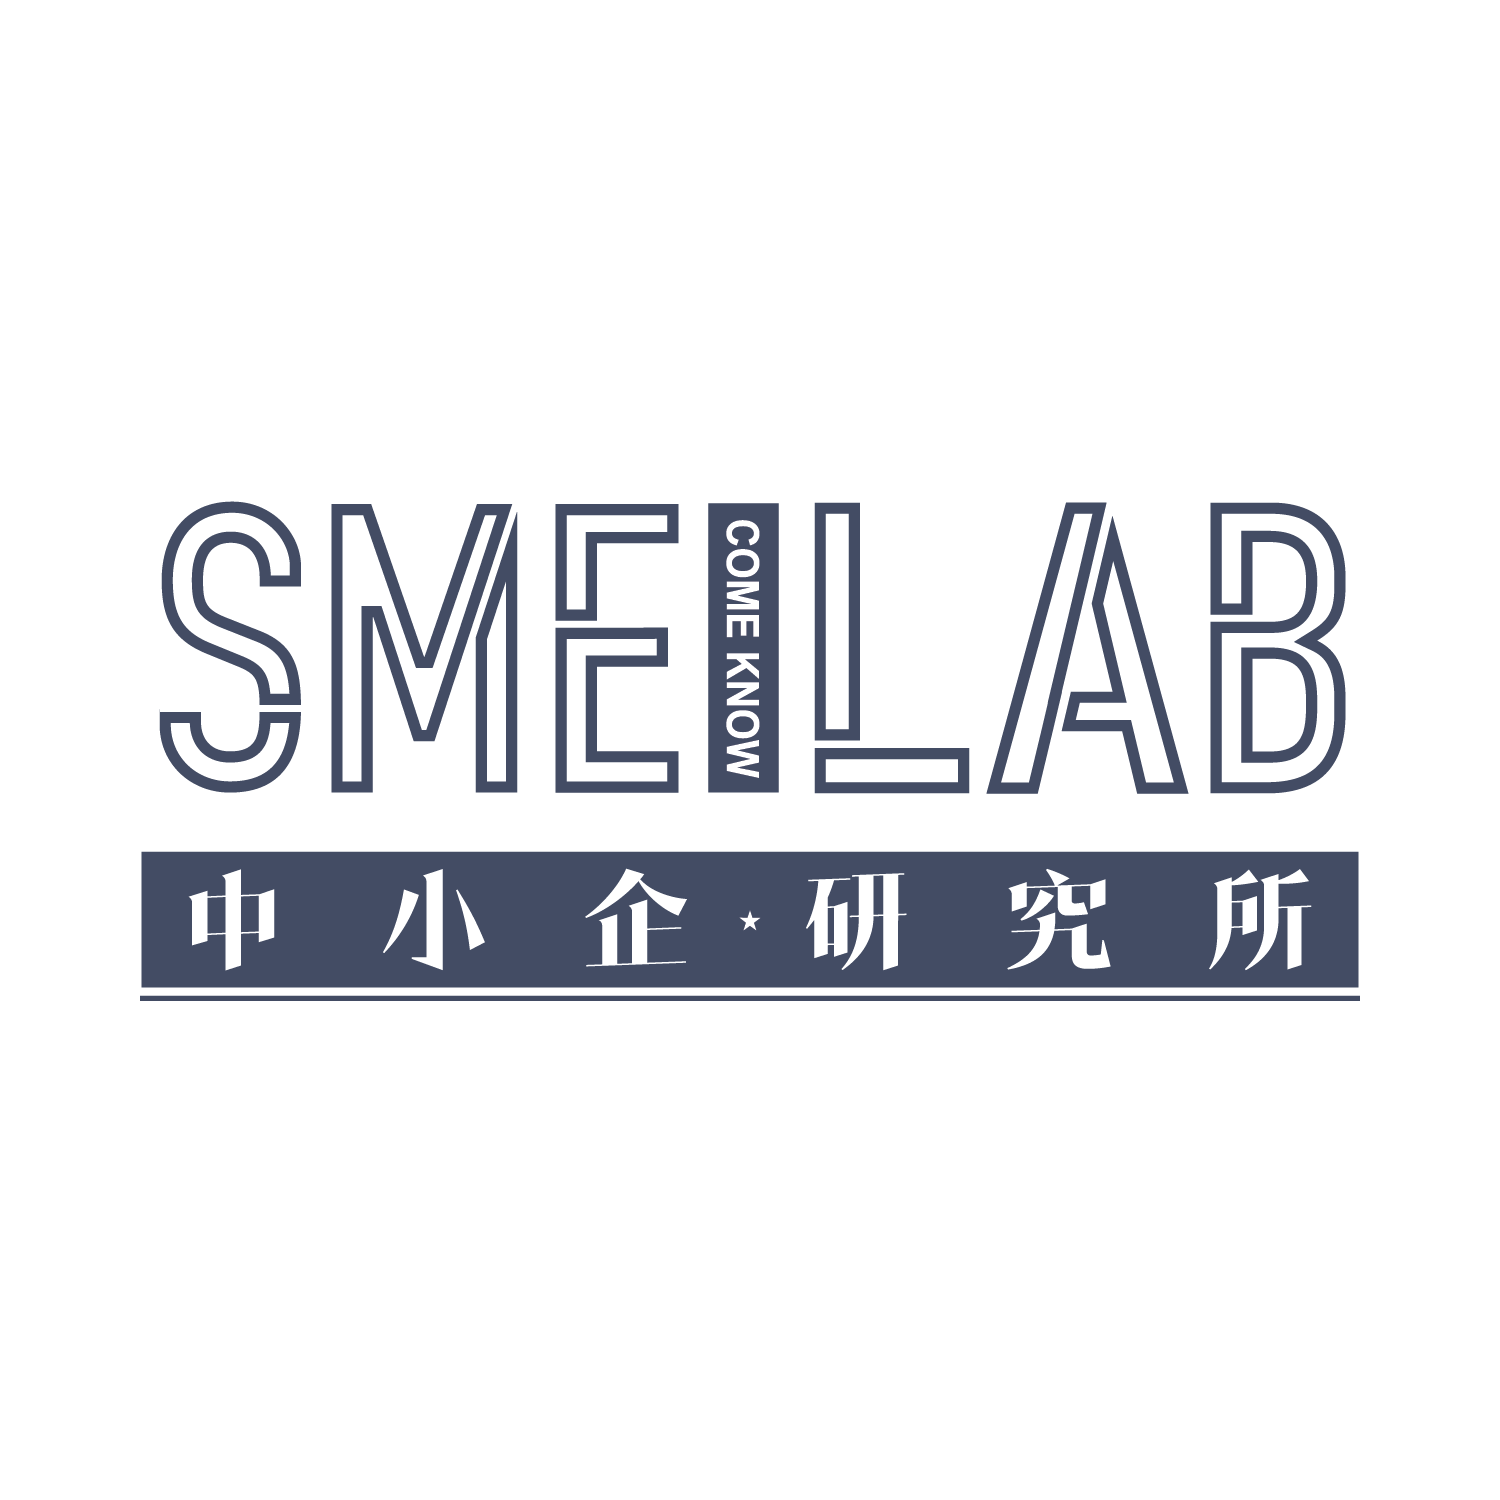 SME Lab